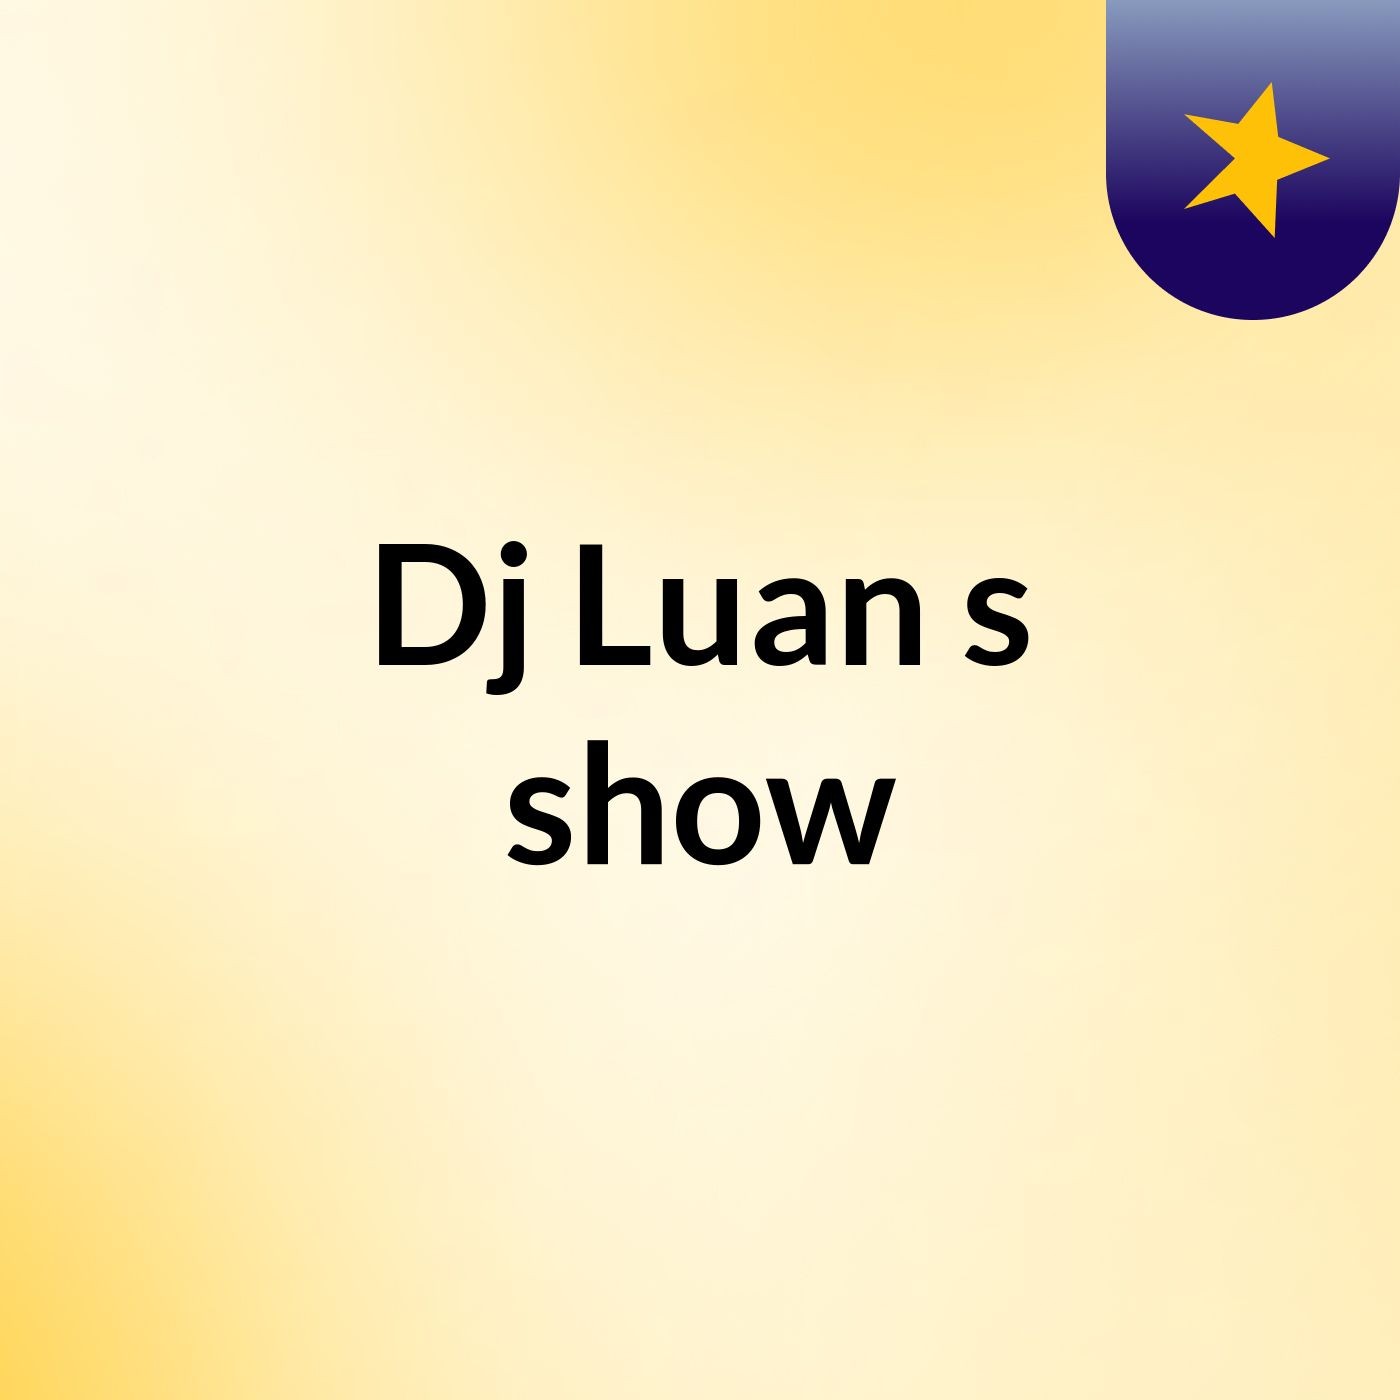 Dj Luan's show